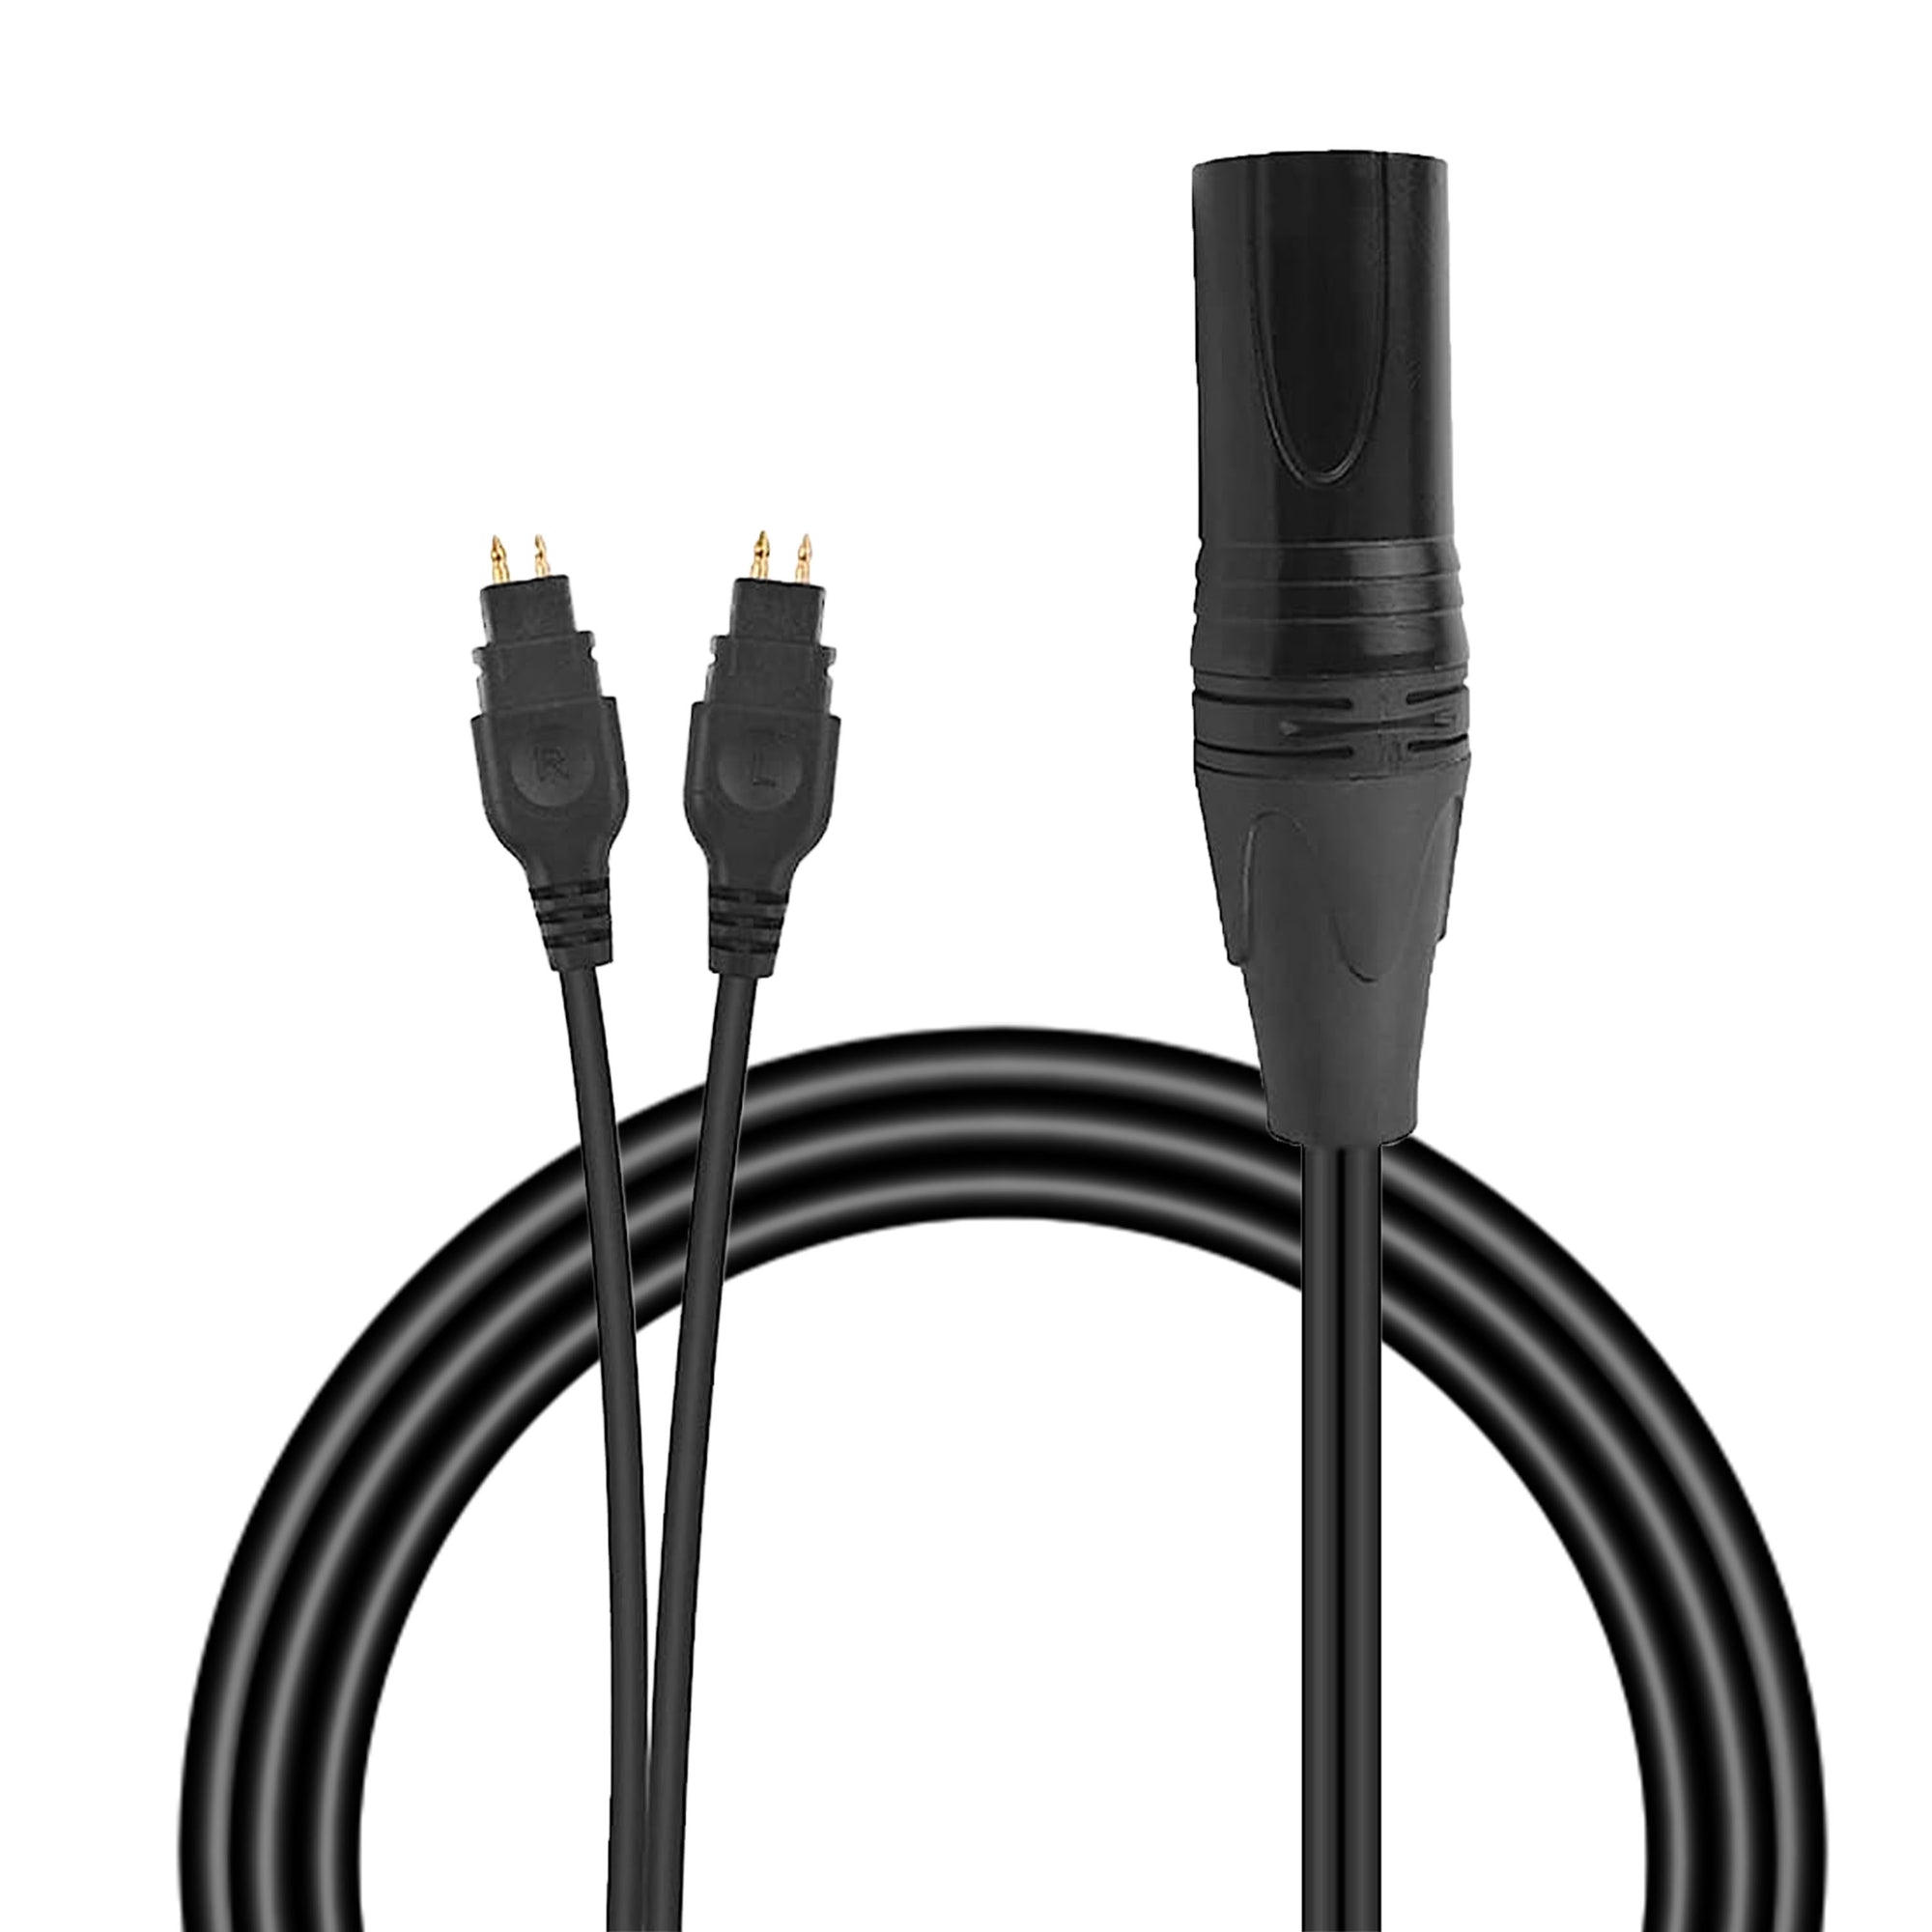 Replacement Audio HIFI XLR Cable for Sennheiser HD600, HD650, HD660s & HD580 headsets, Dual 2-Pin to 4-Pin XLR Connectors